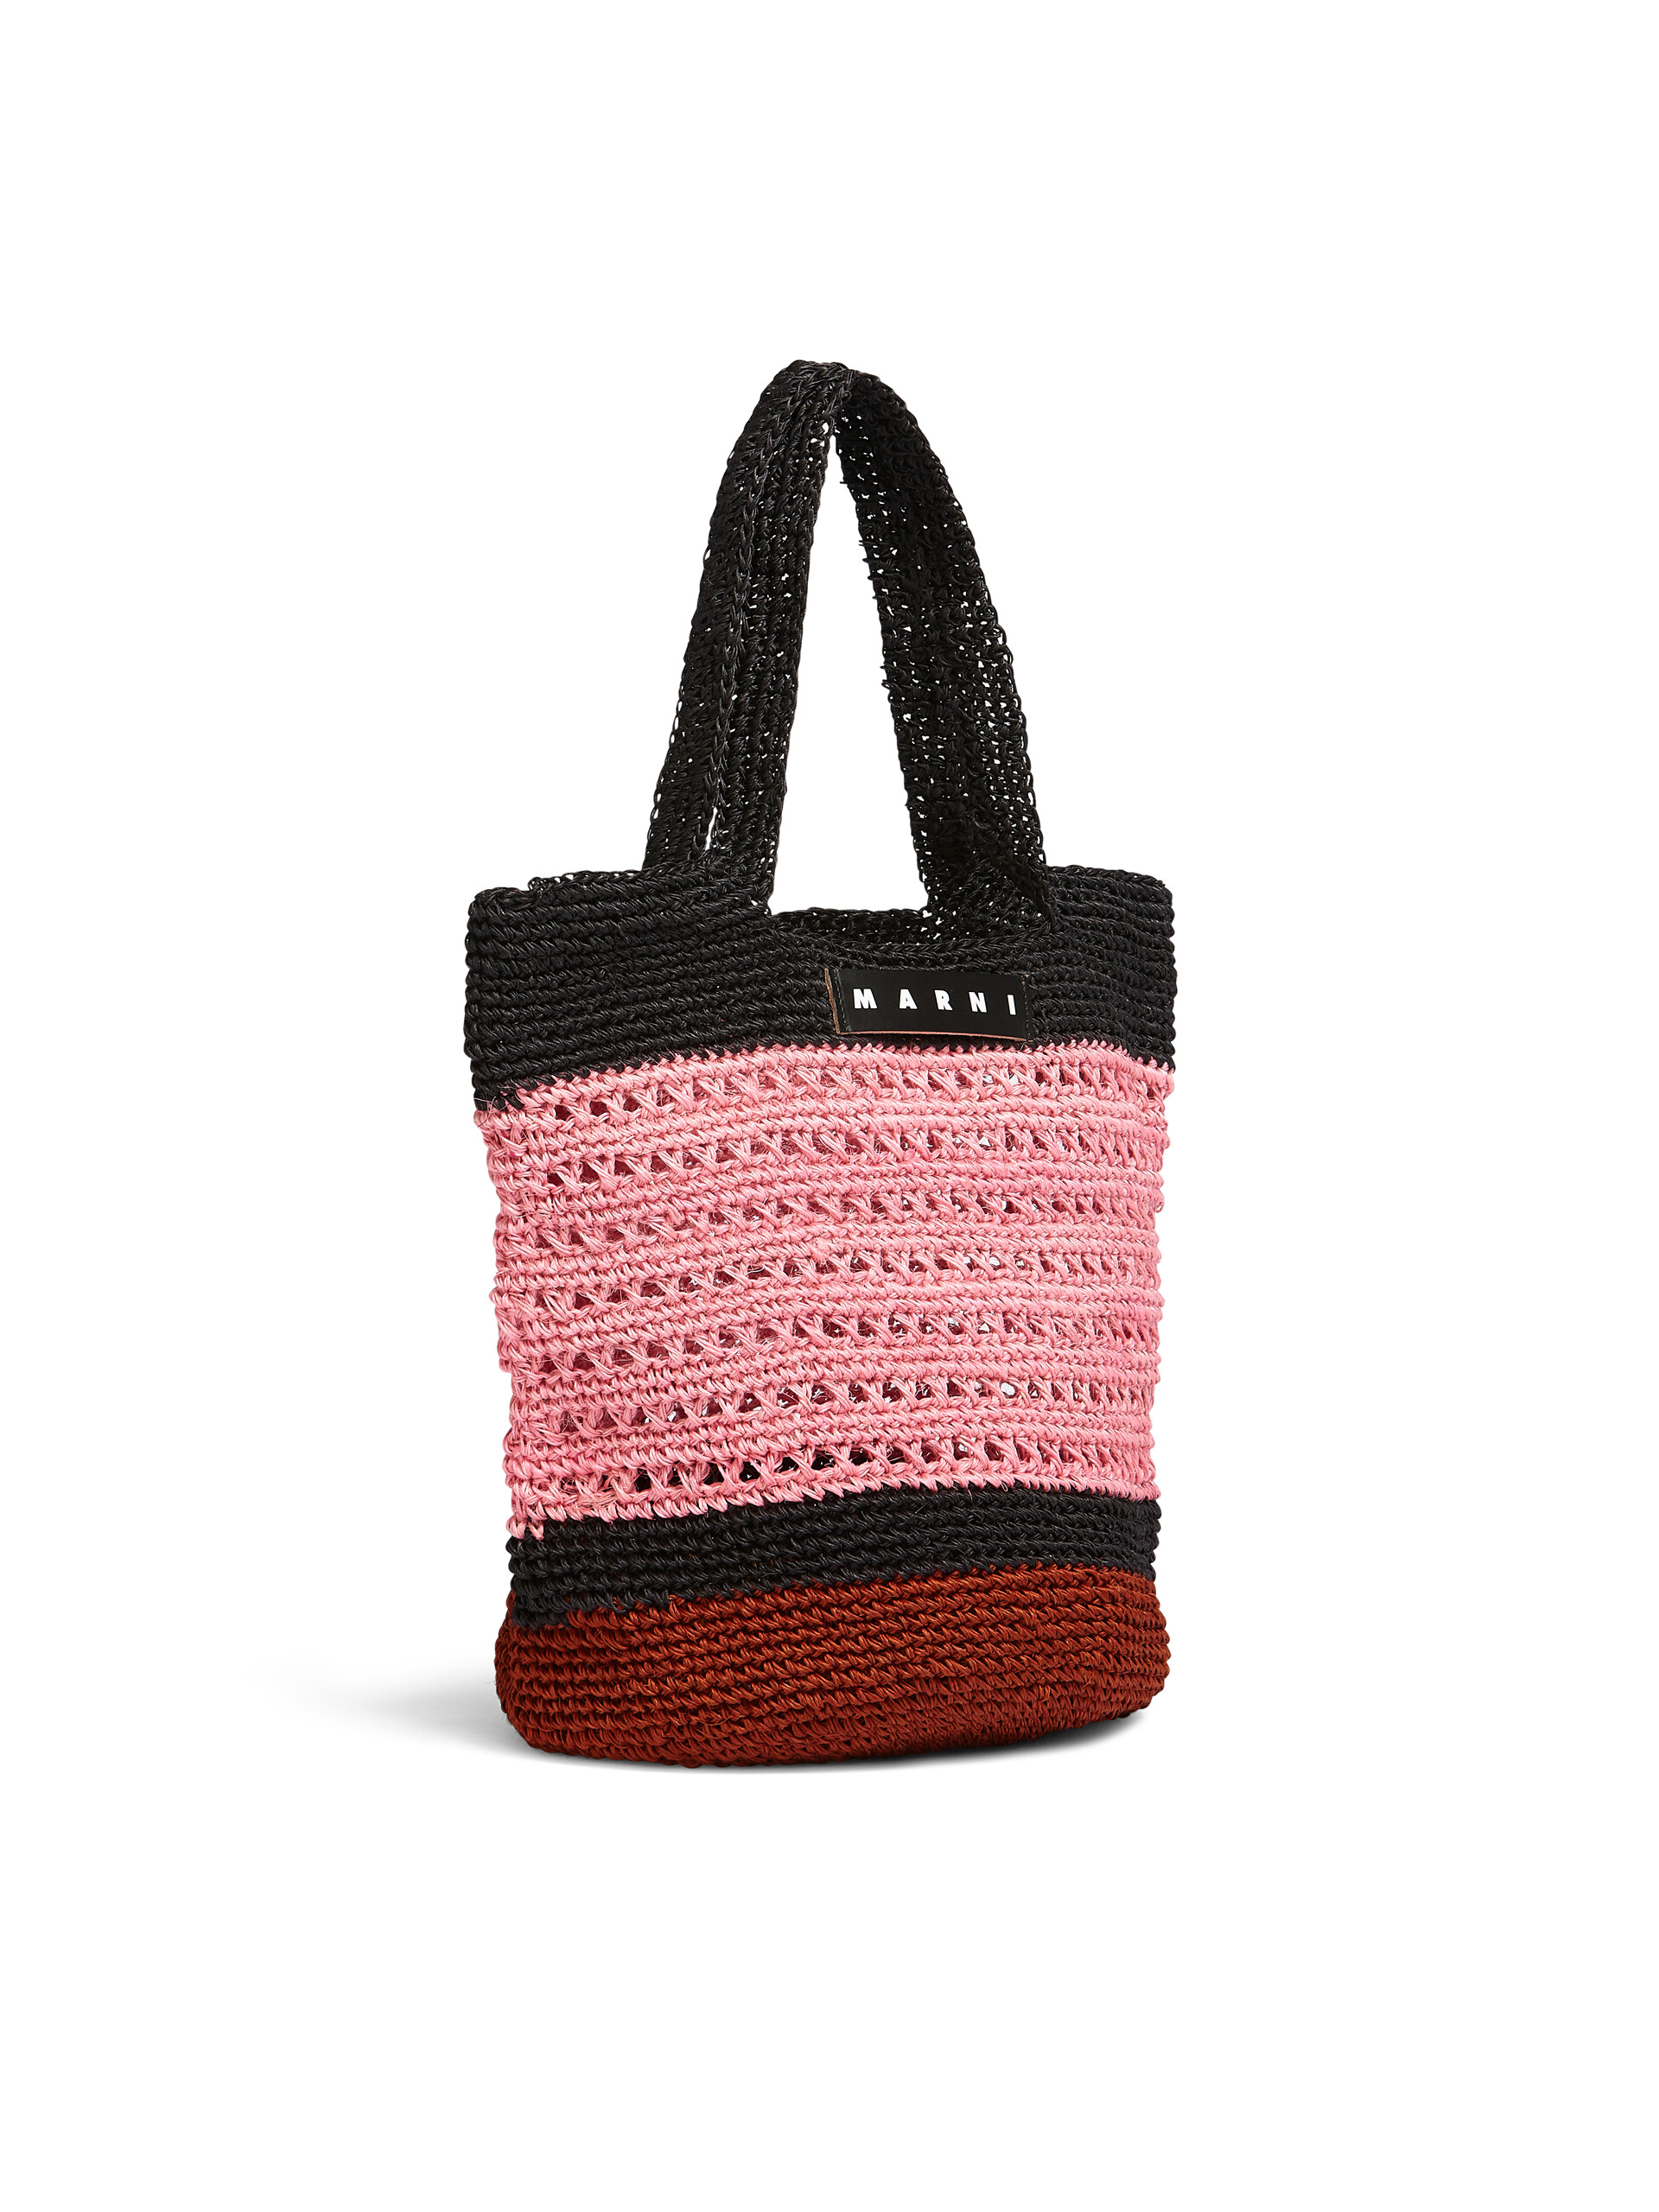 MARNI MARKET DRUM bag in pink and black natural fiber - Shopping Bags - Image 2